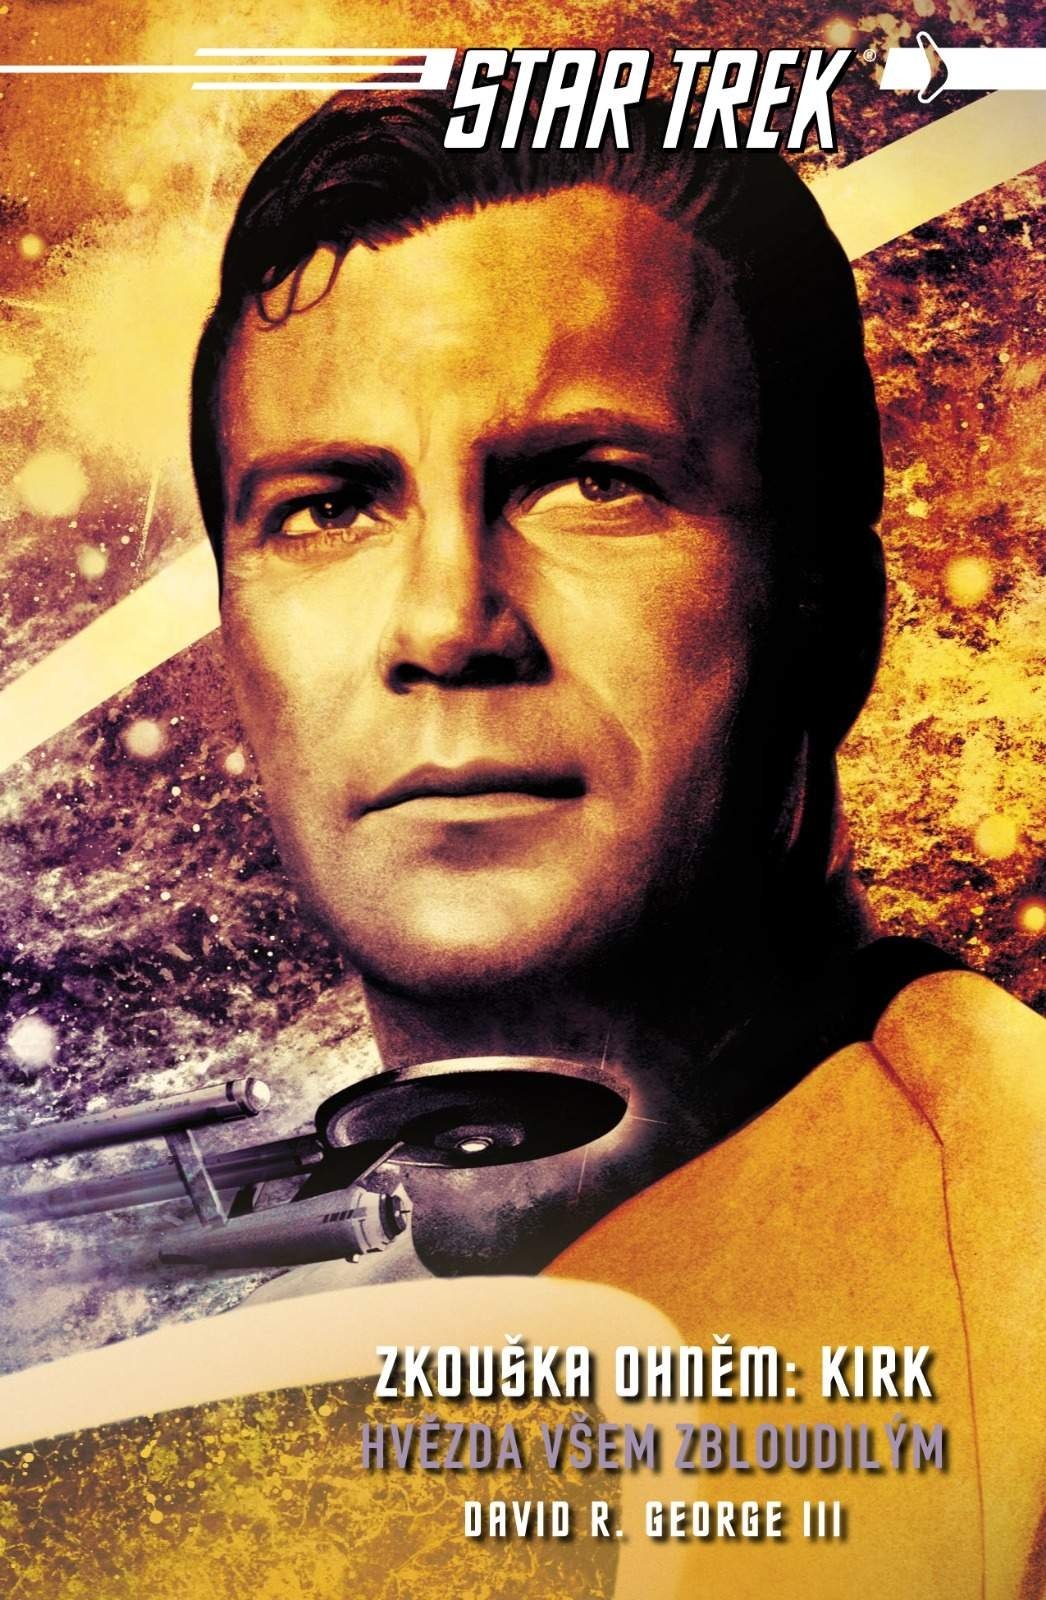 Star Trek: Zkouška ohněm: Kirk - Hvězda všem zbloudilým - David R. George